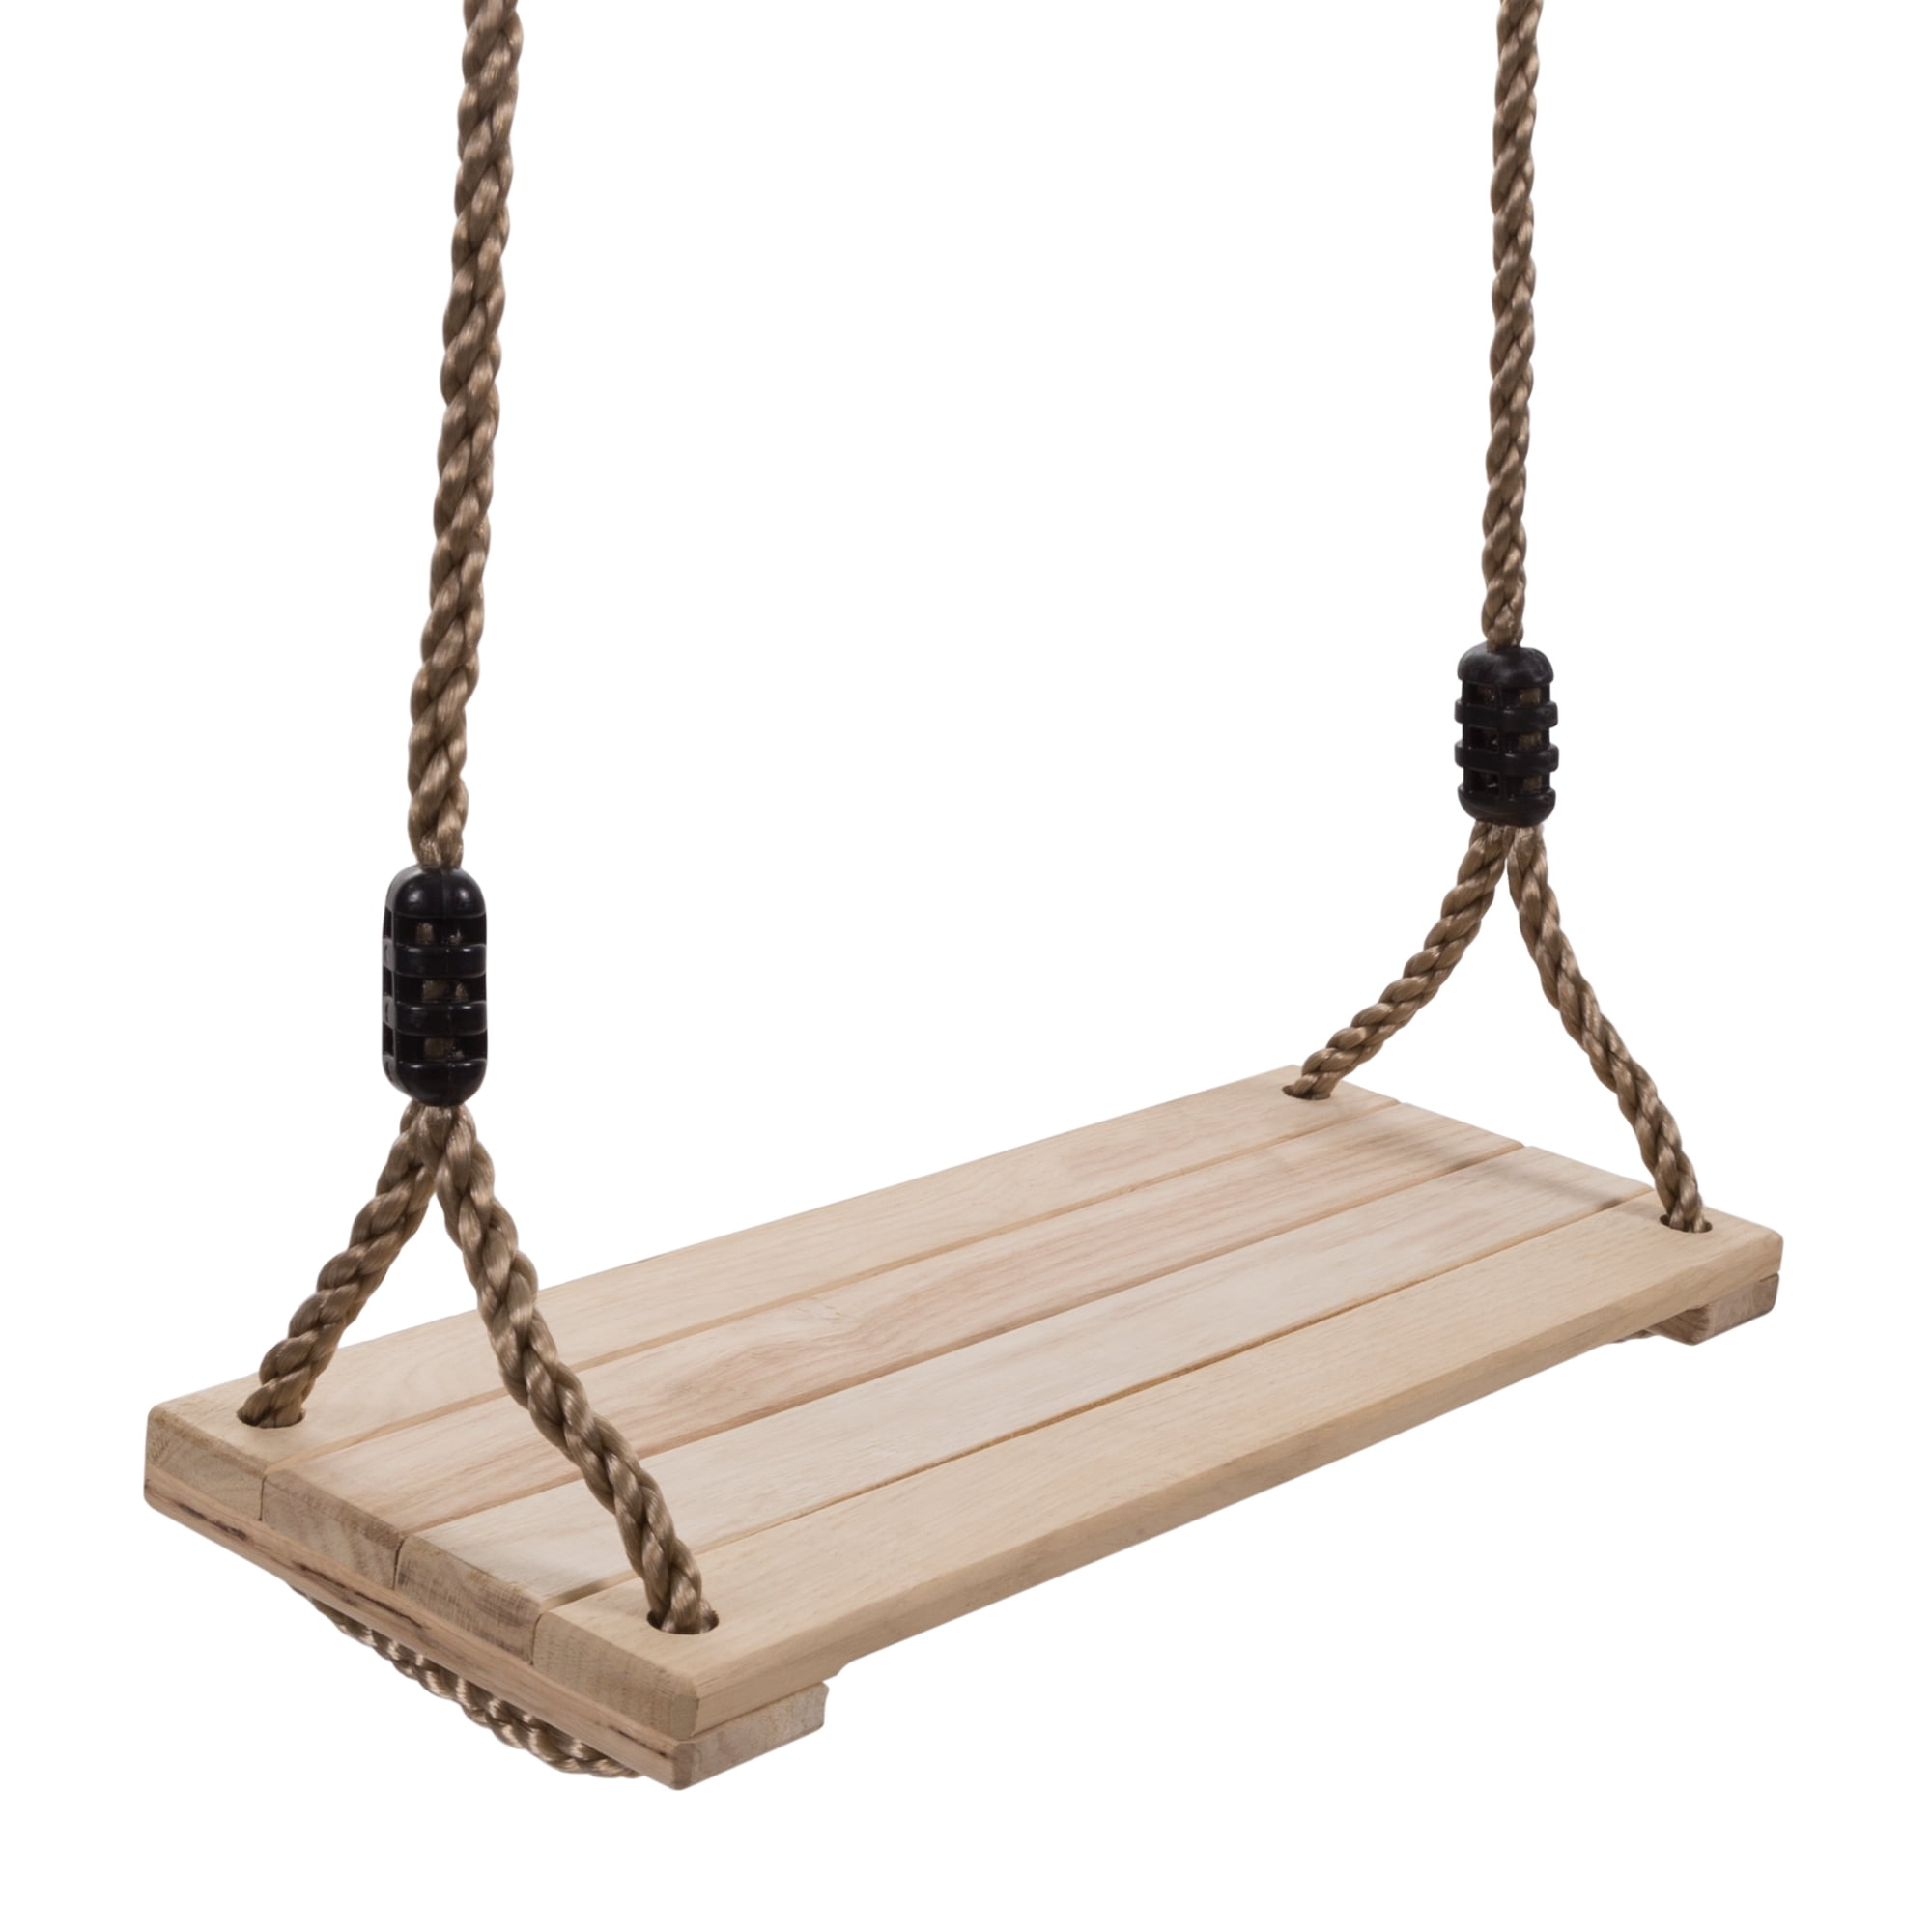 Wood Tree Swing Board Hanging DIY Wooden Seat Kids Playhouse Outdoor Garden Toy 